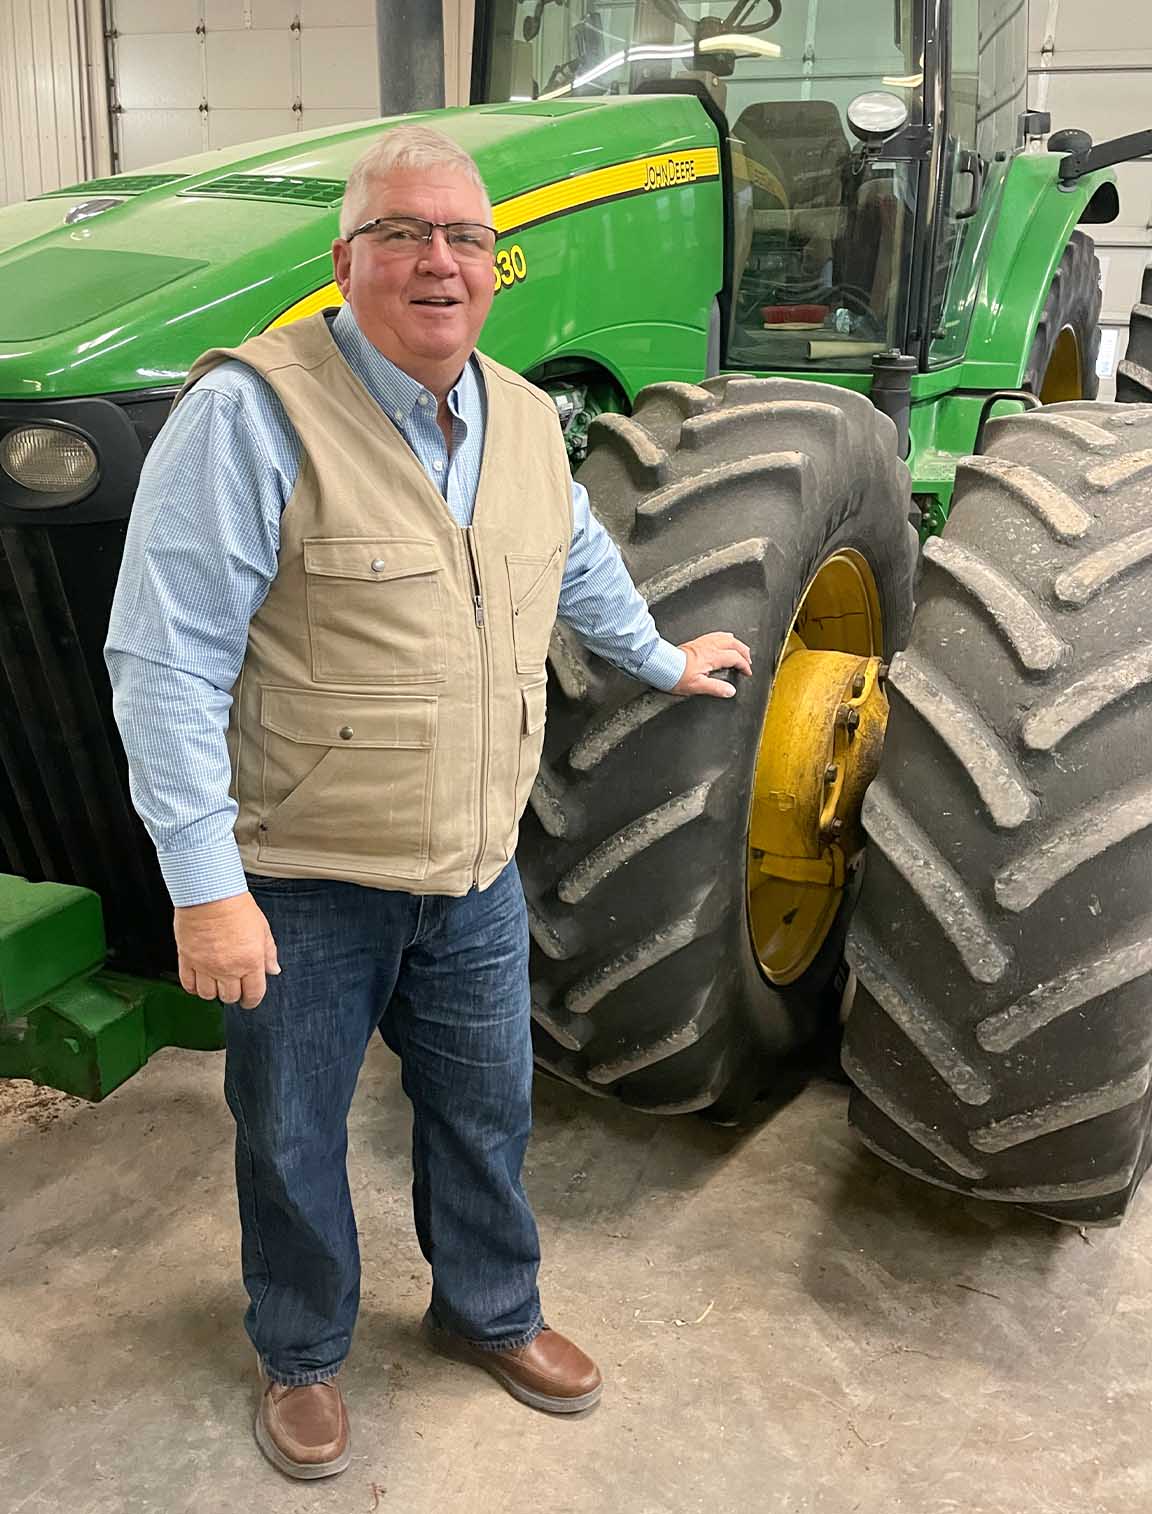 Farmer standing near John Deere tractor